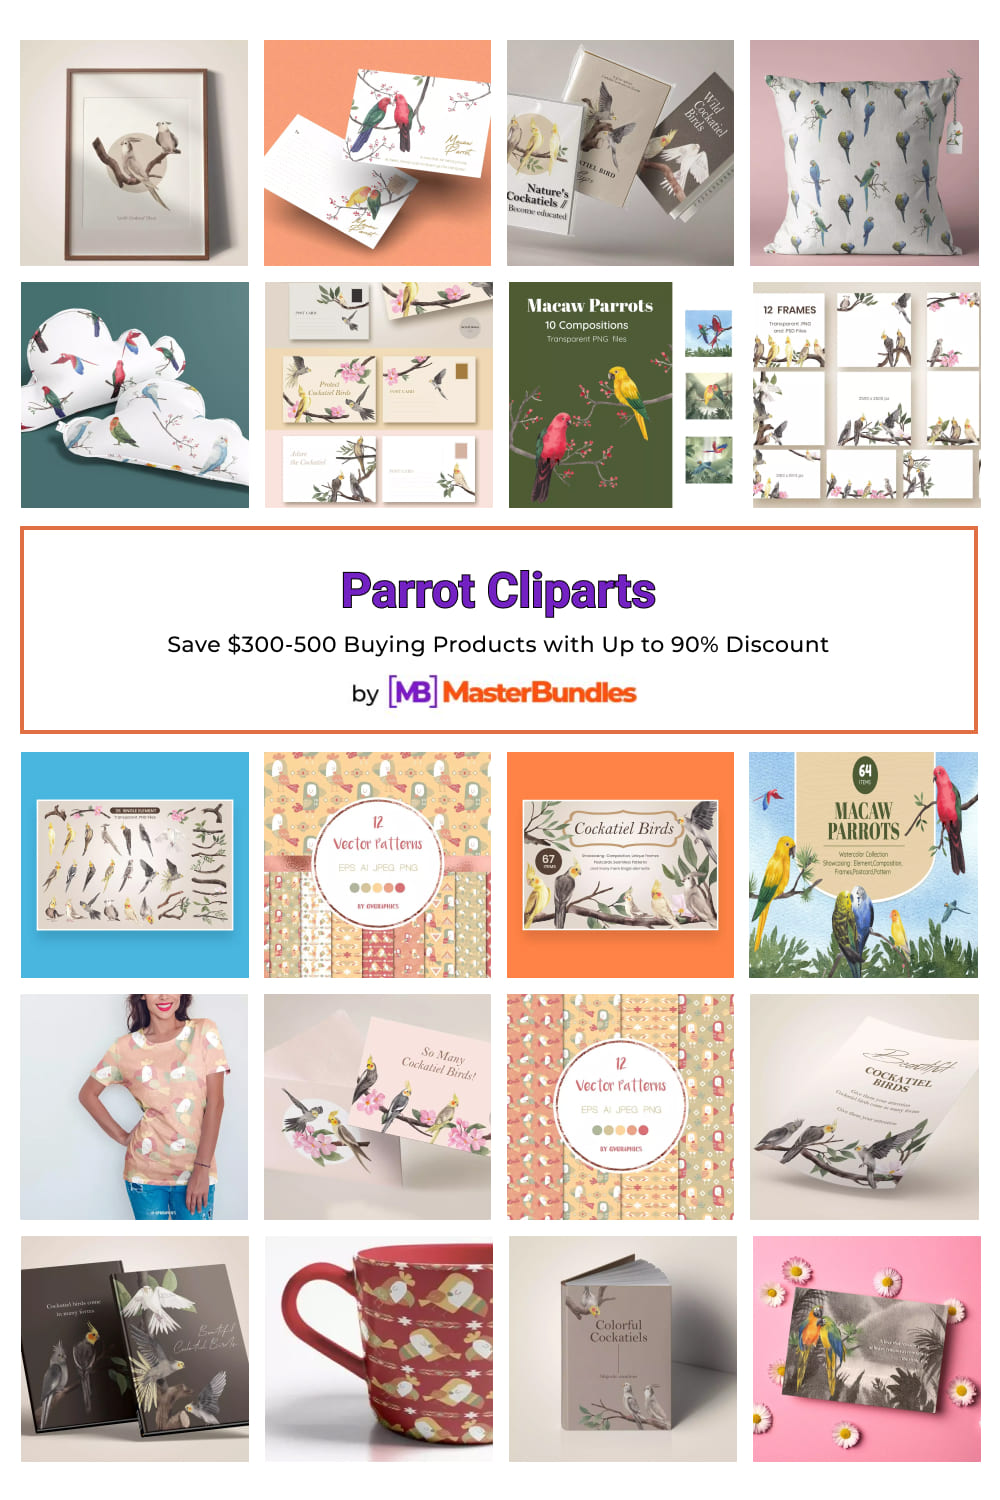 Parrot Cliparts for Pinterest.